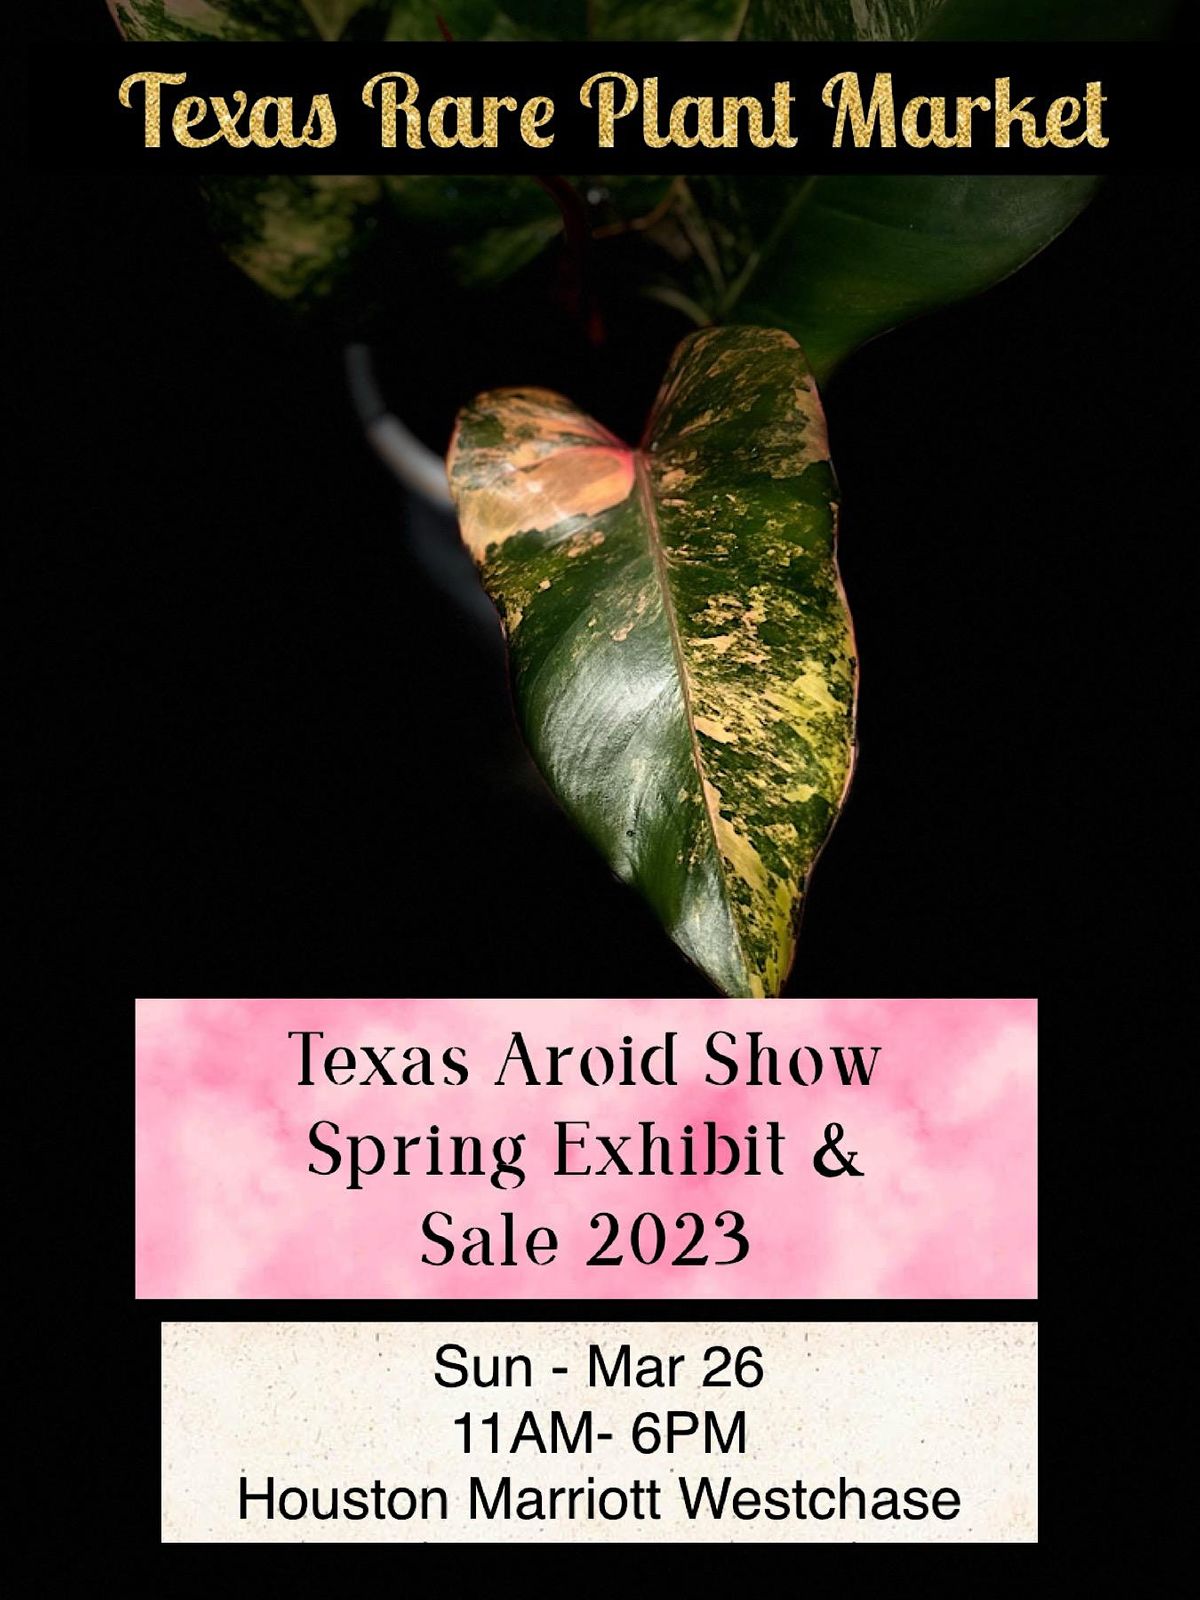 Texas Aroid Show Spring Exhibit & Sale March 26th Houston